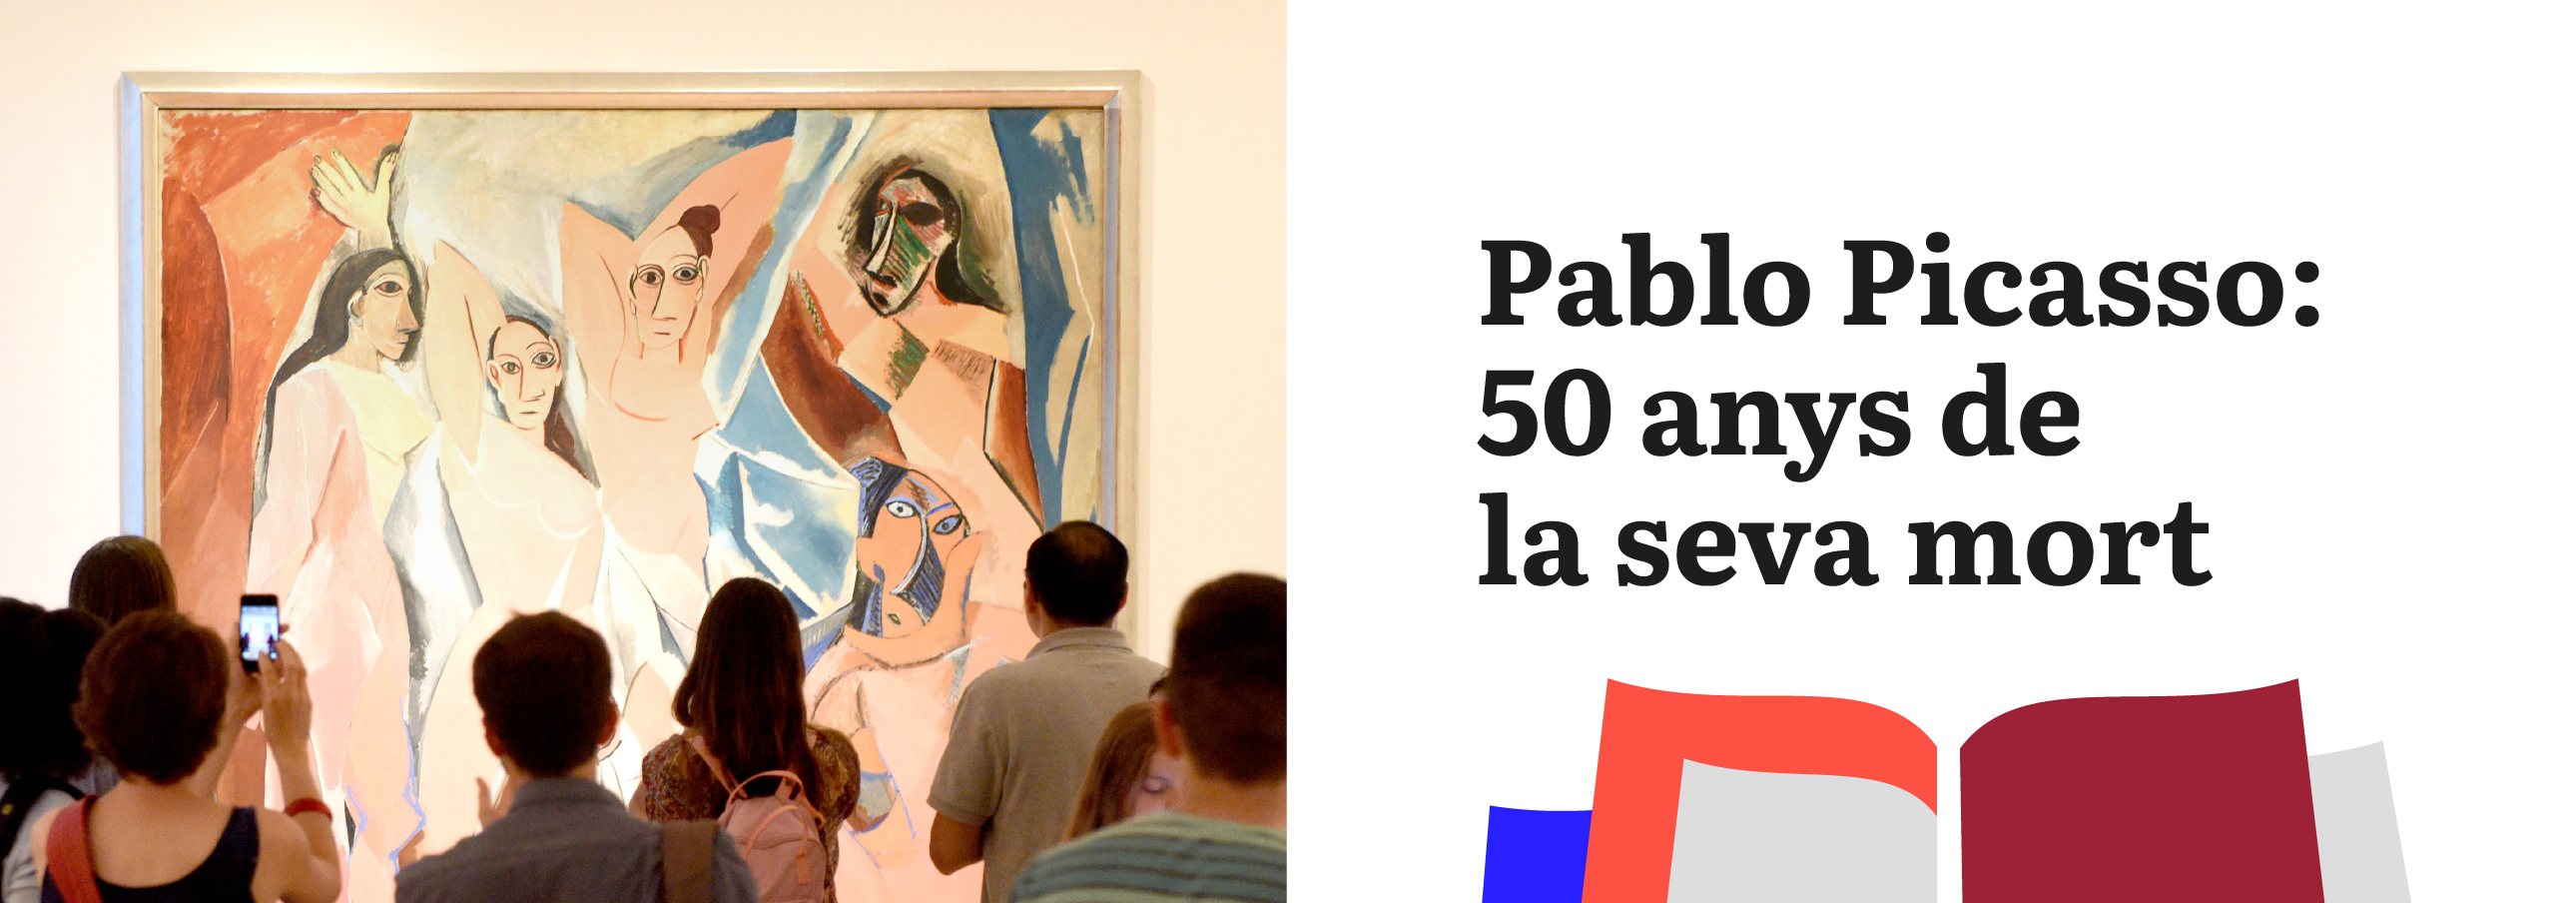 Pablo Picasso: 50 anys de la seva mort